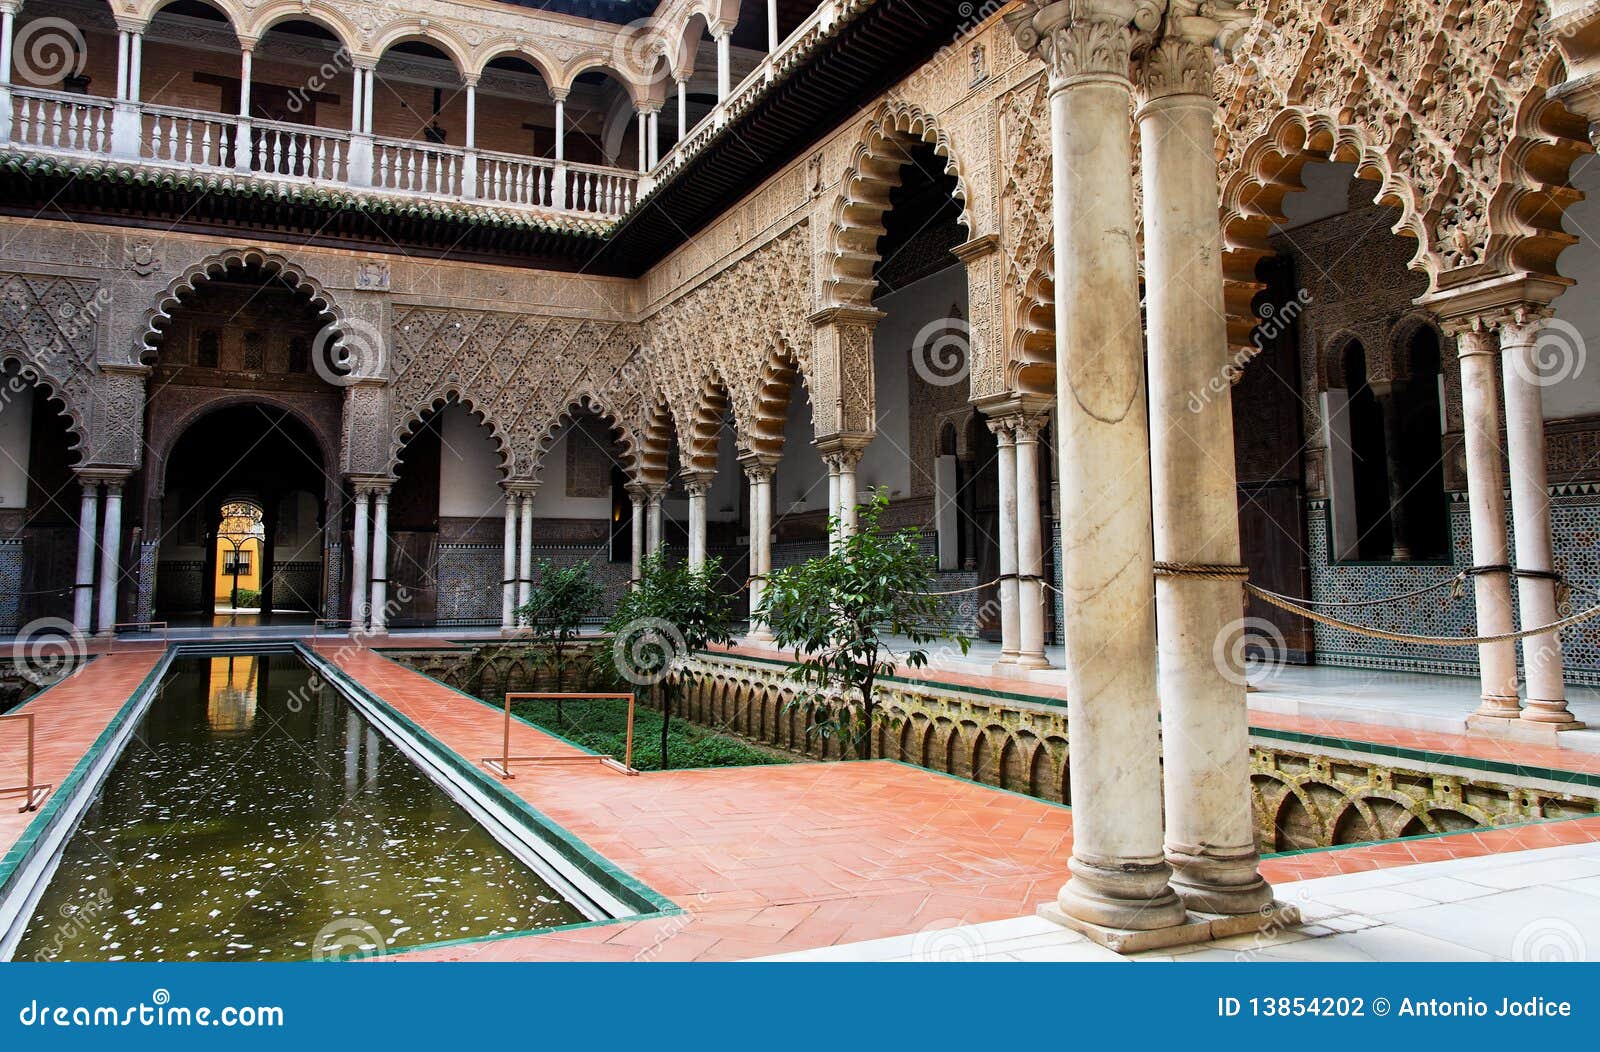 seville, real alcazar palace inner patio